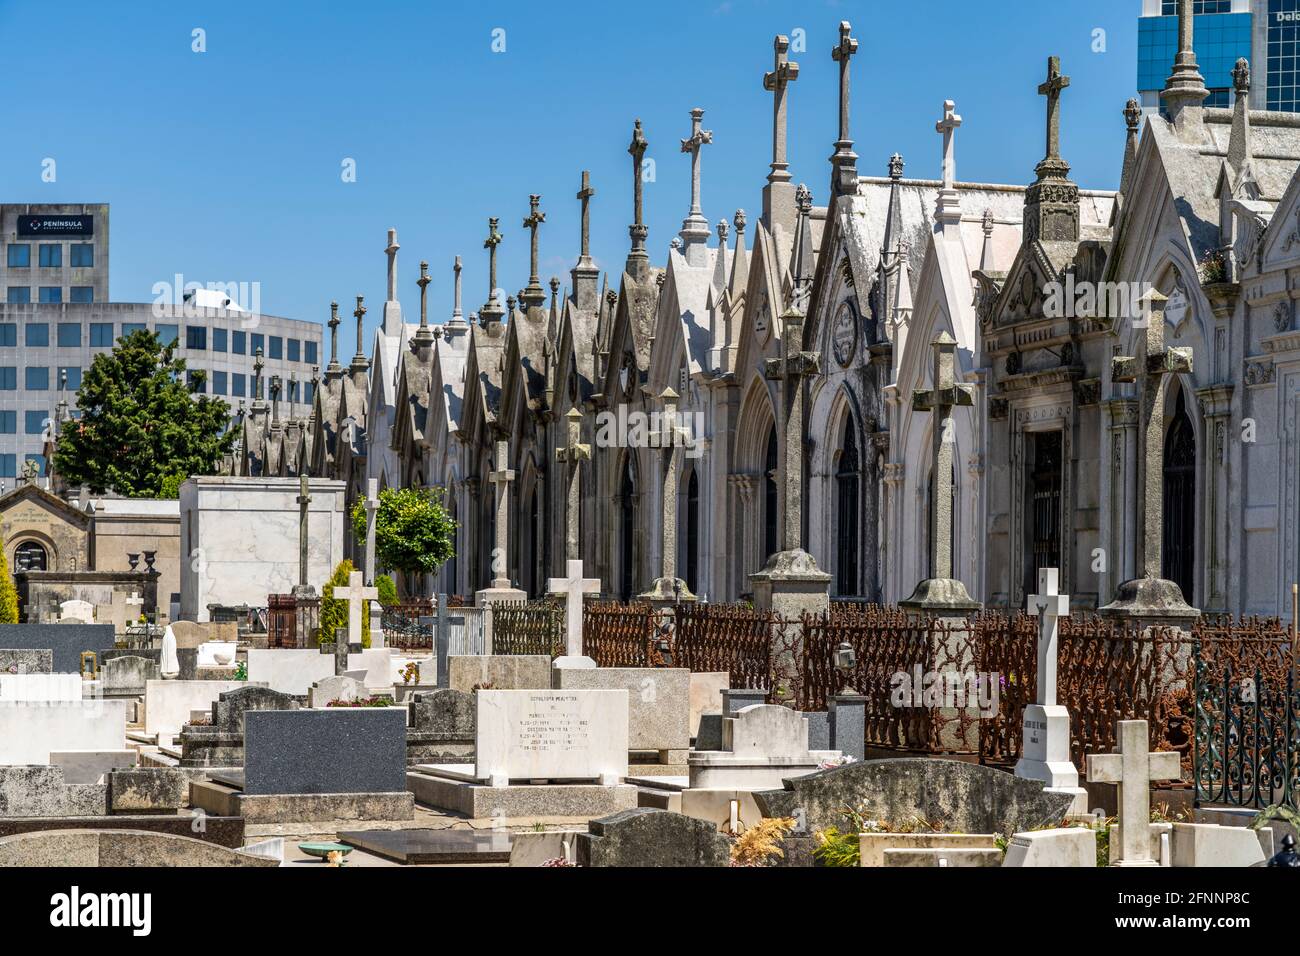 Friedhof Cemitério de Agramonte in Porto, Portugal, Europa   |  Cemetery Cemitério de Agramonte in Porto, Portugal, Europe Stock Photo